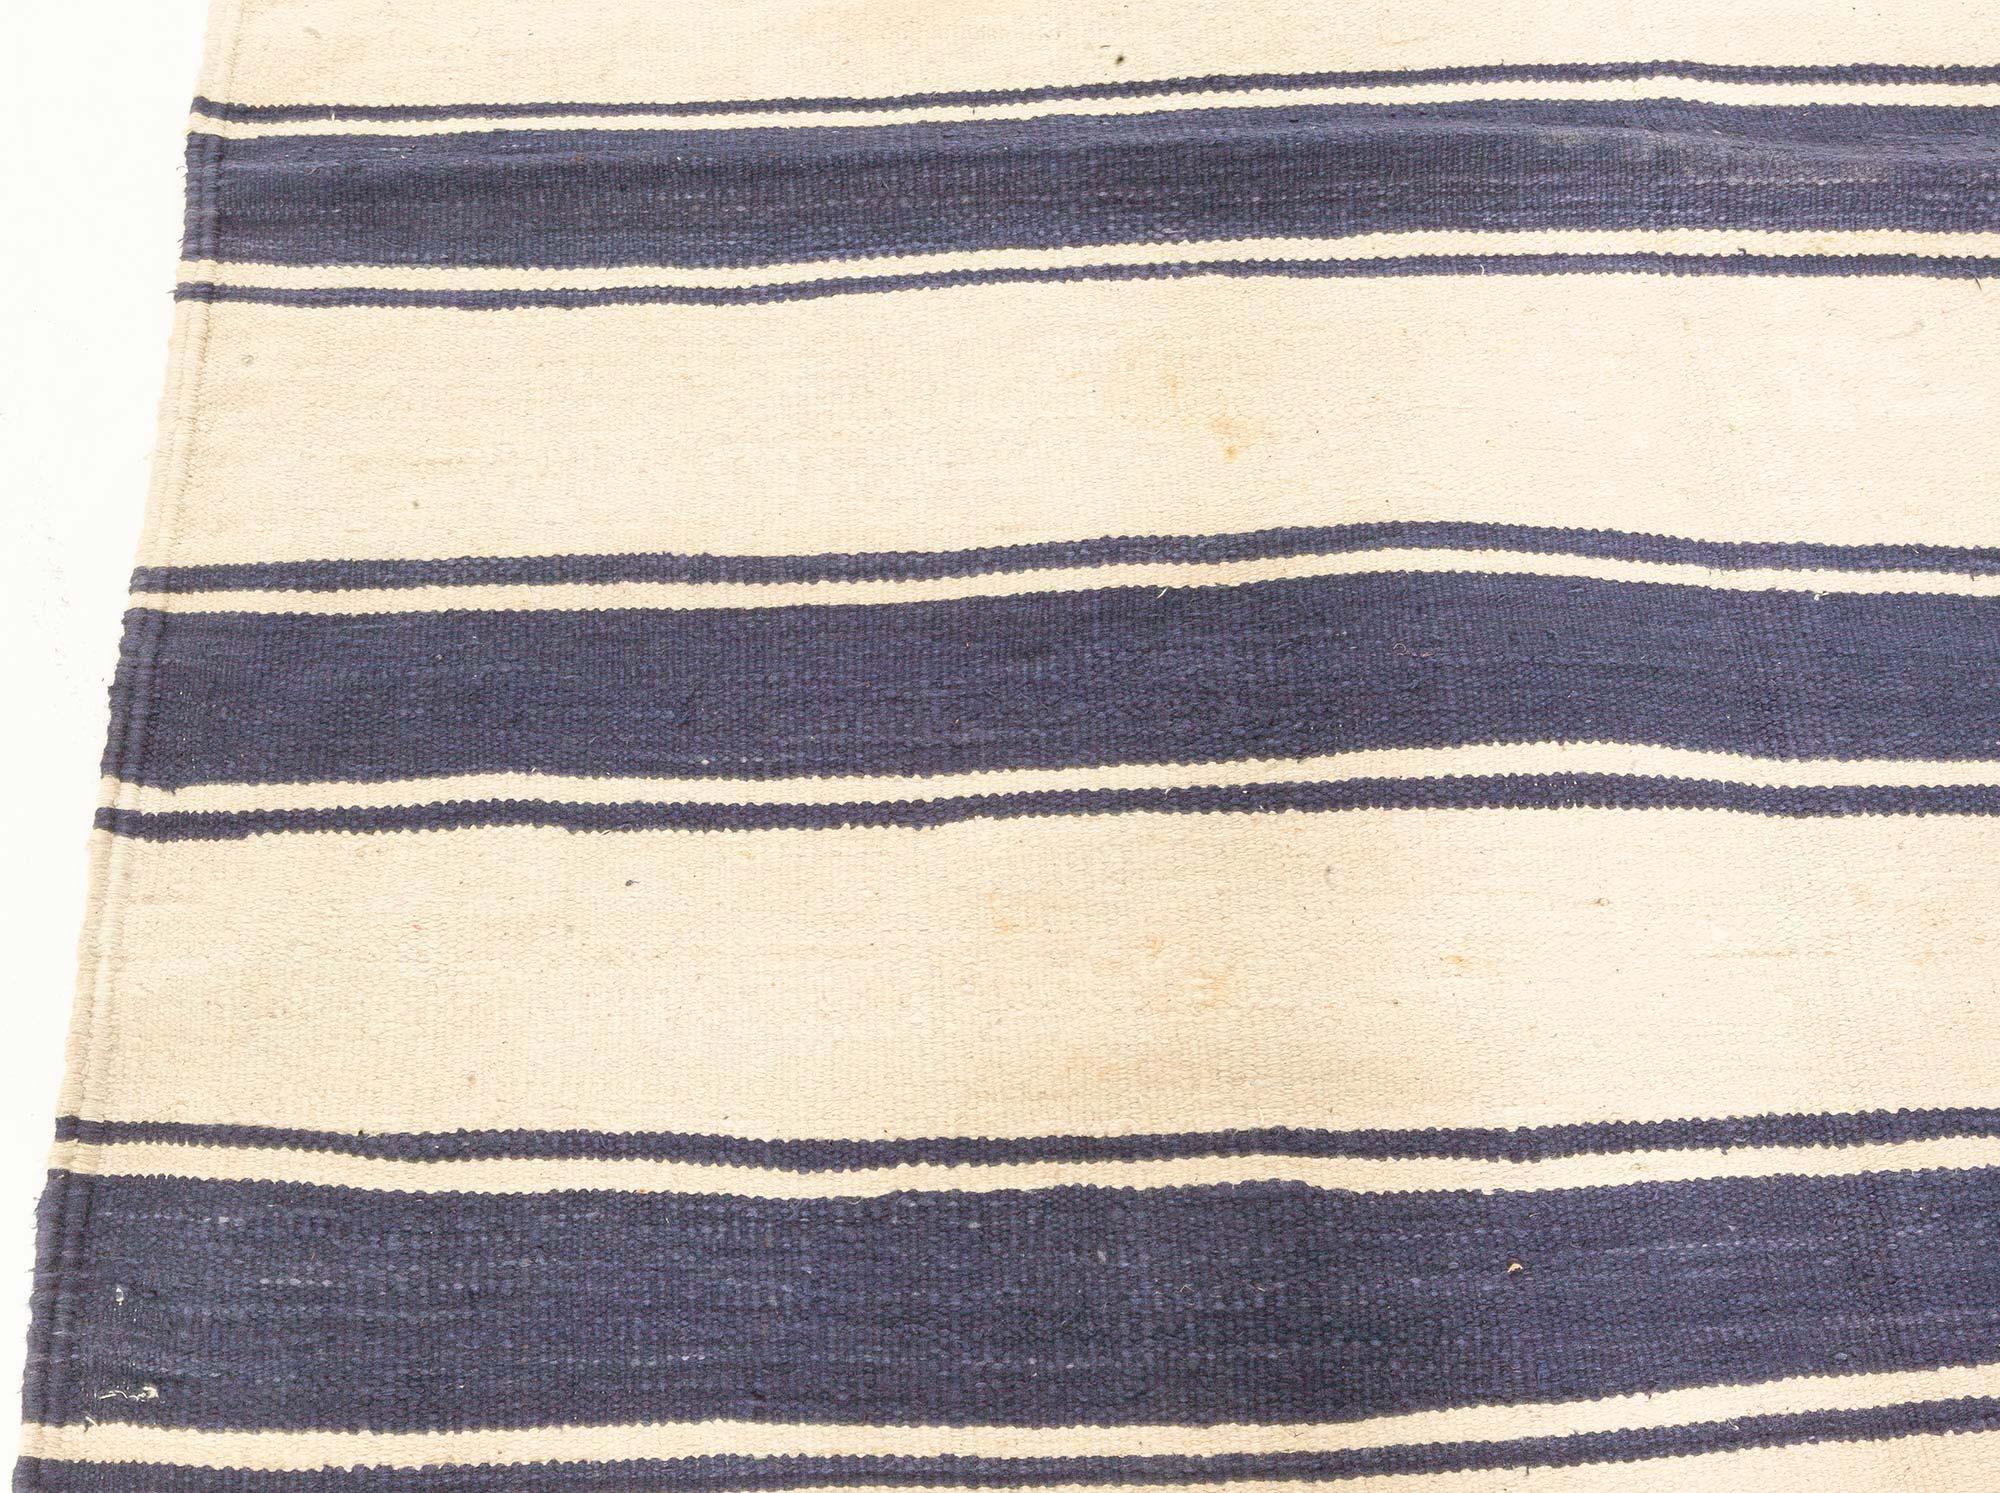 Vintage Indian Dhurrie Striped rug
Size: 3'6